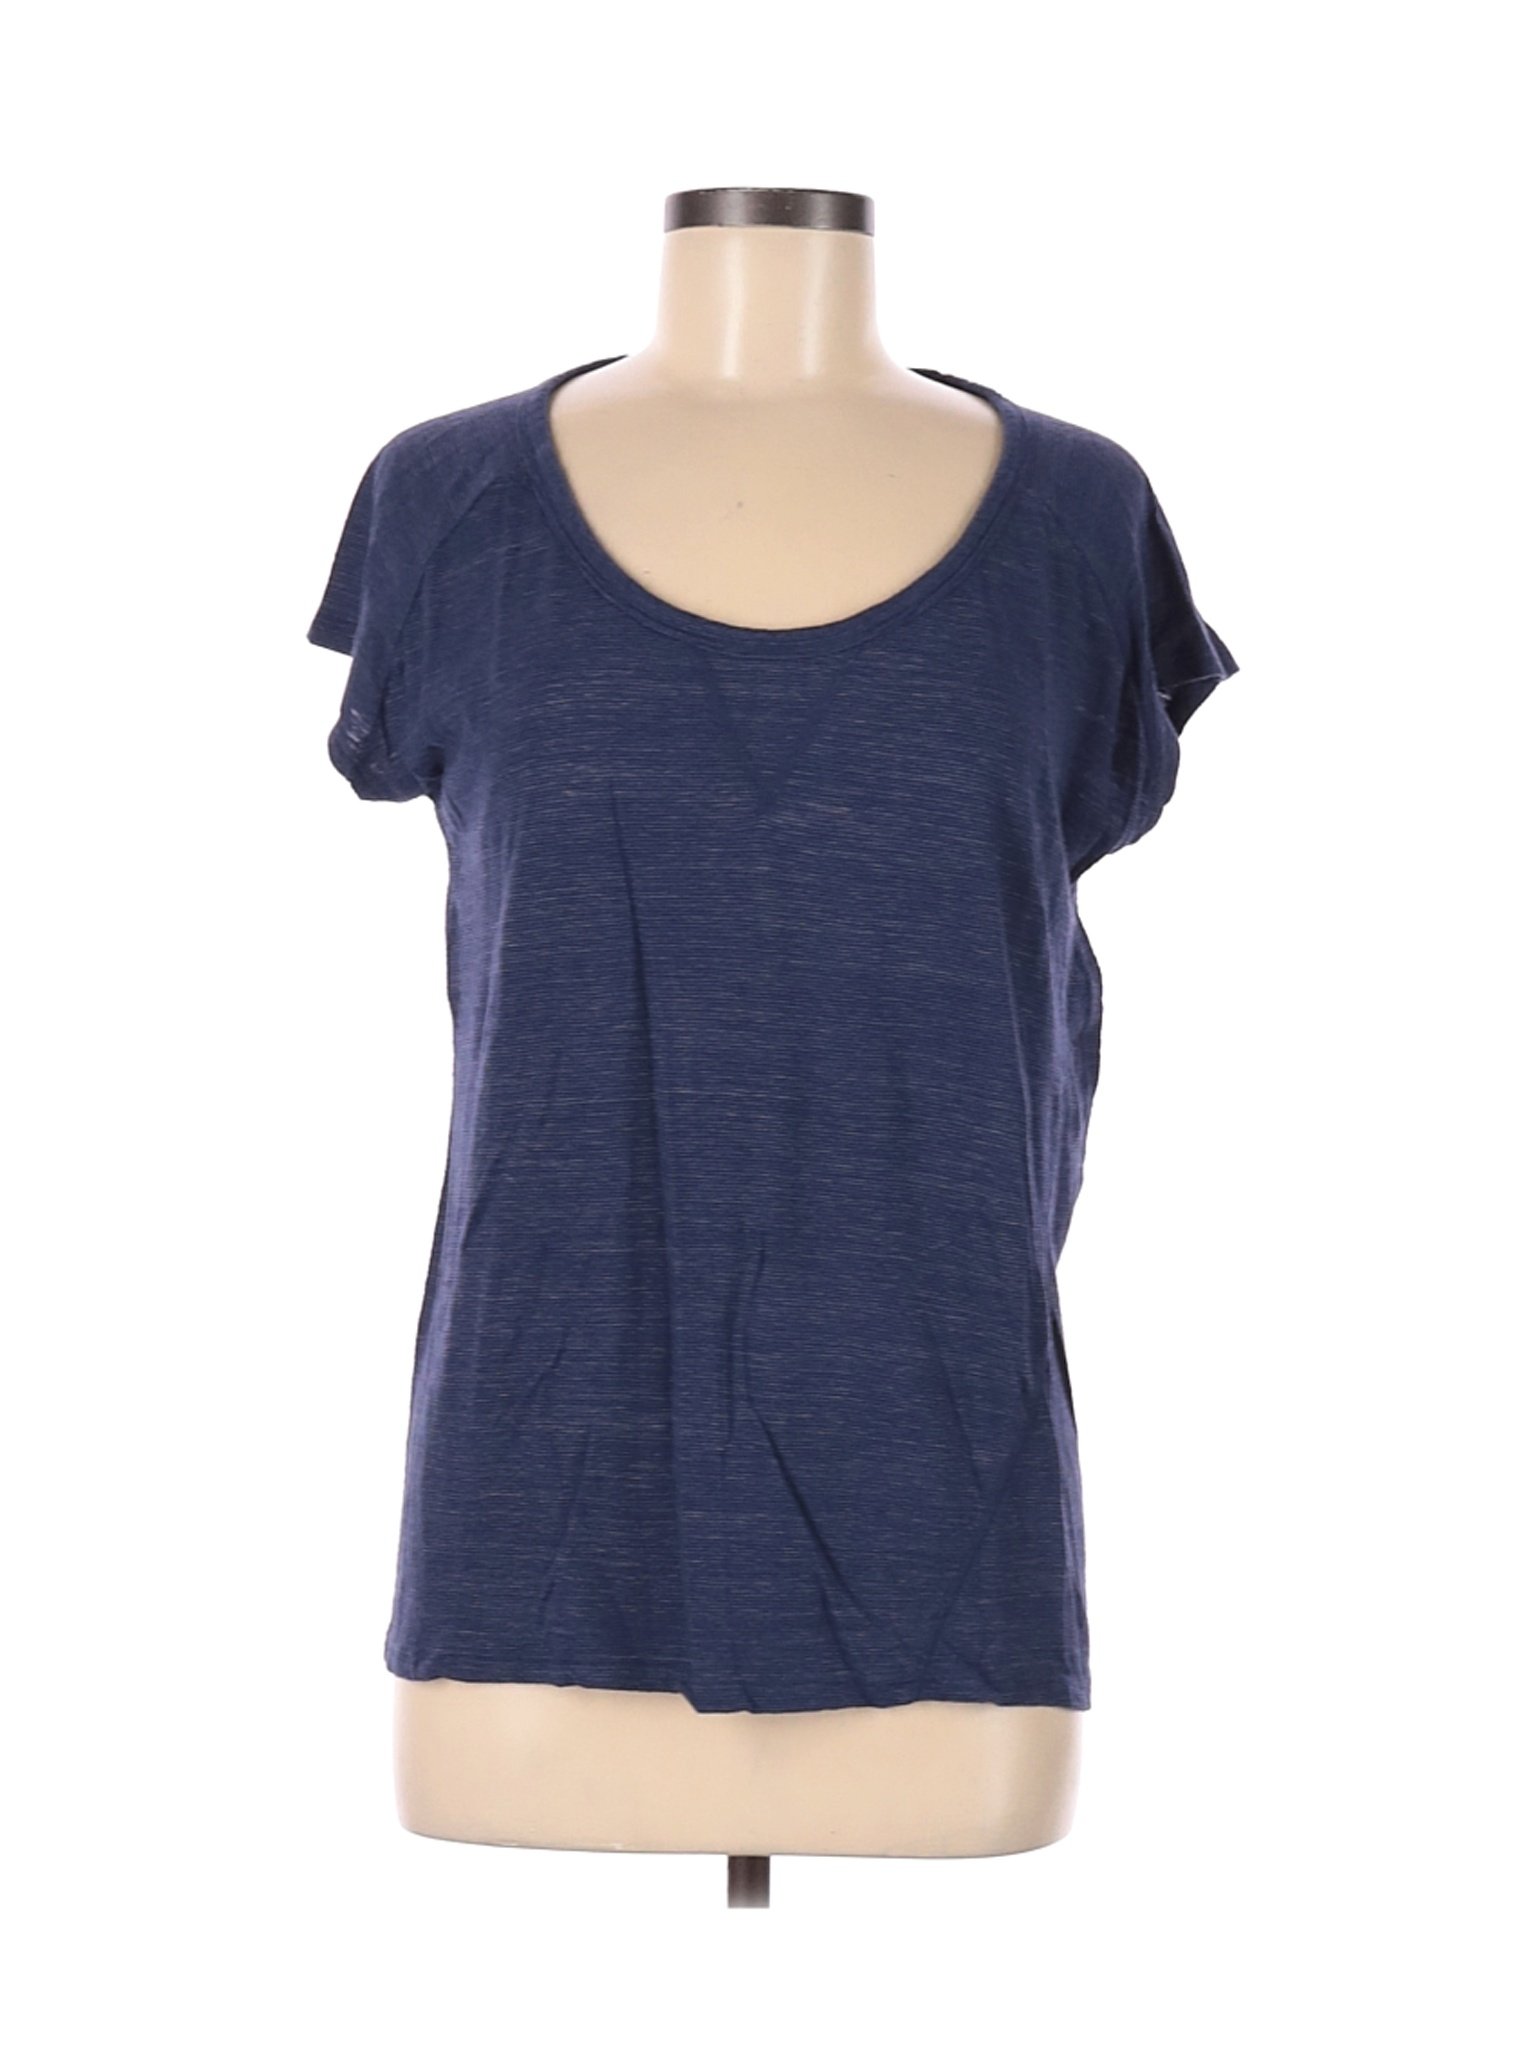 Gap Women Blue Short Sleeve T-Shirt M | eBay